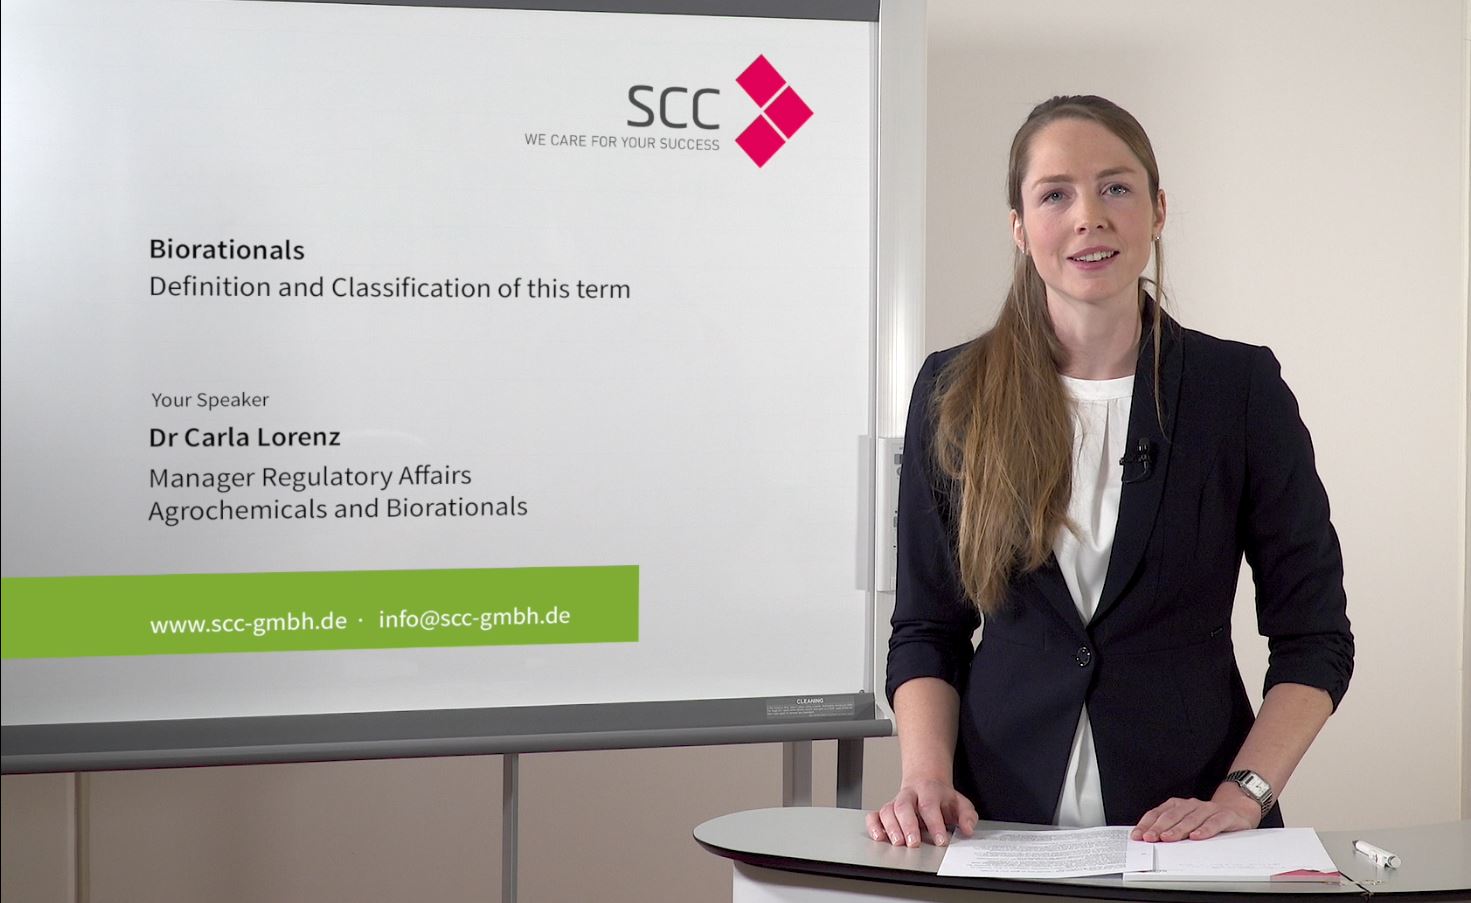 SCC video guidance on biorationals